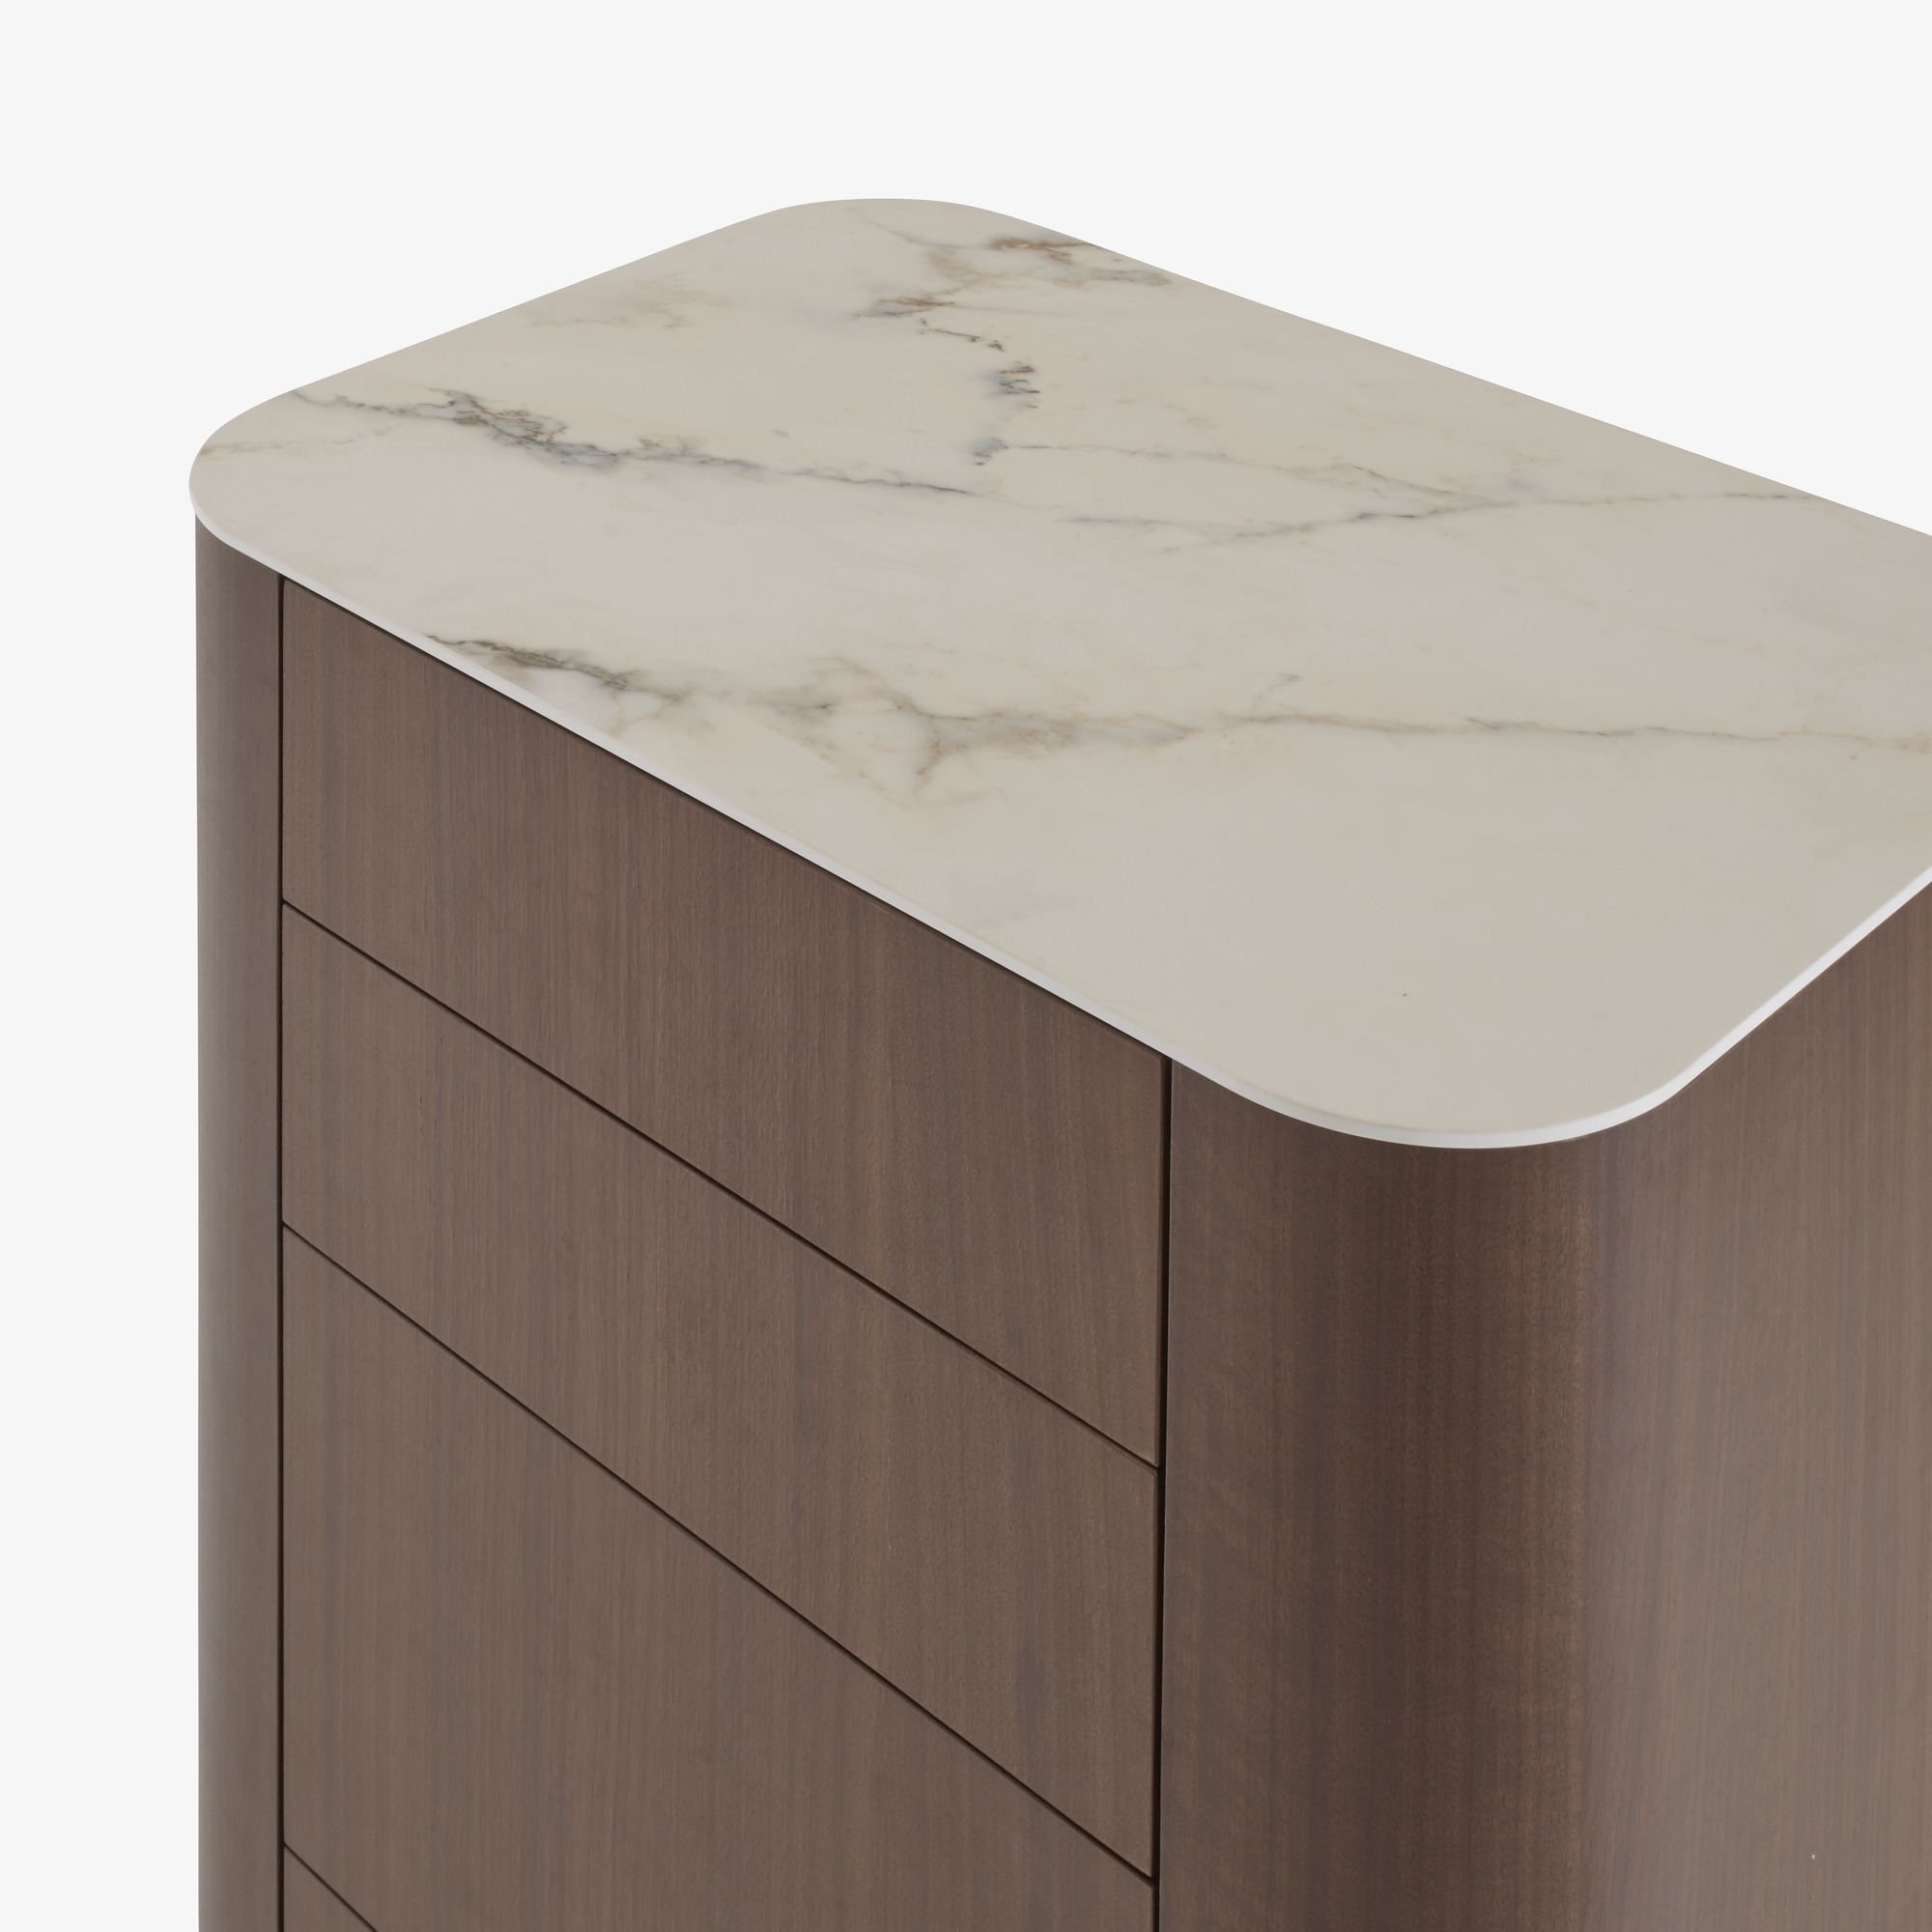 Image Chest of drawers dark walnut top in white marble-effect ceramic stoneware 6